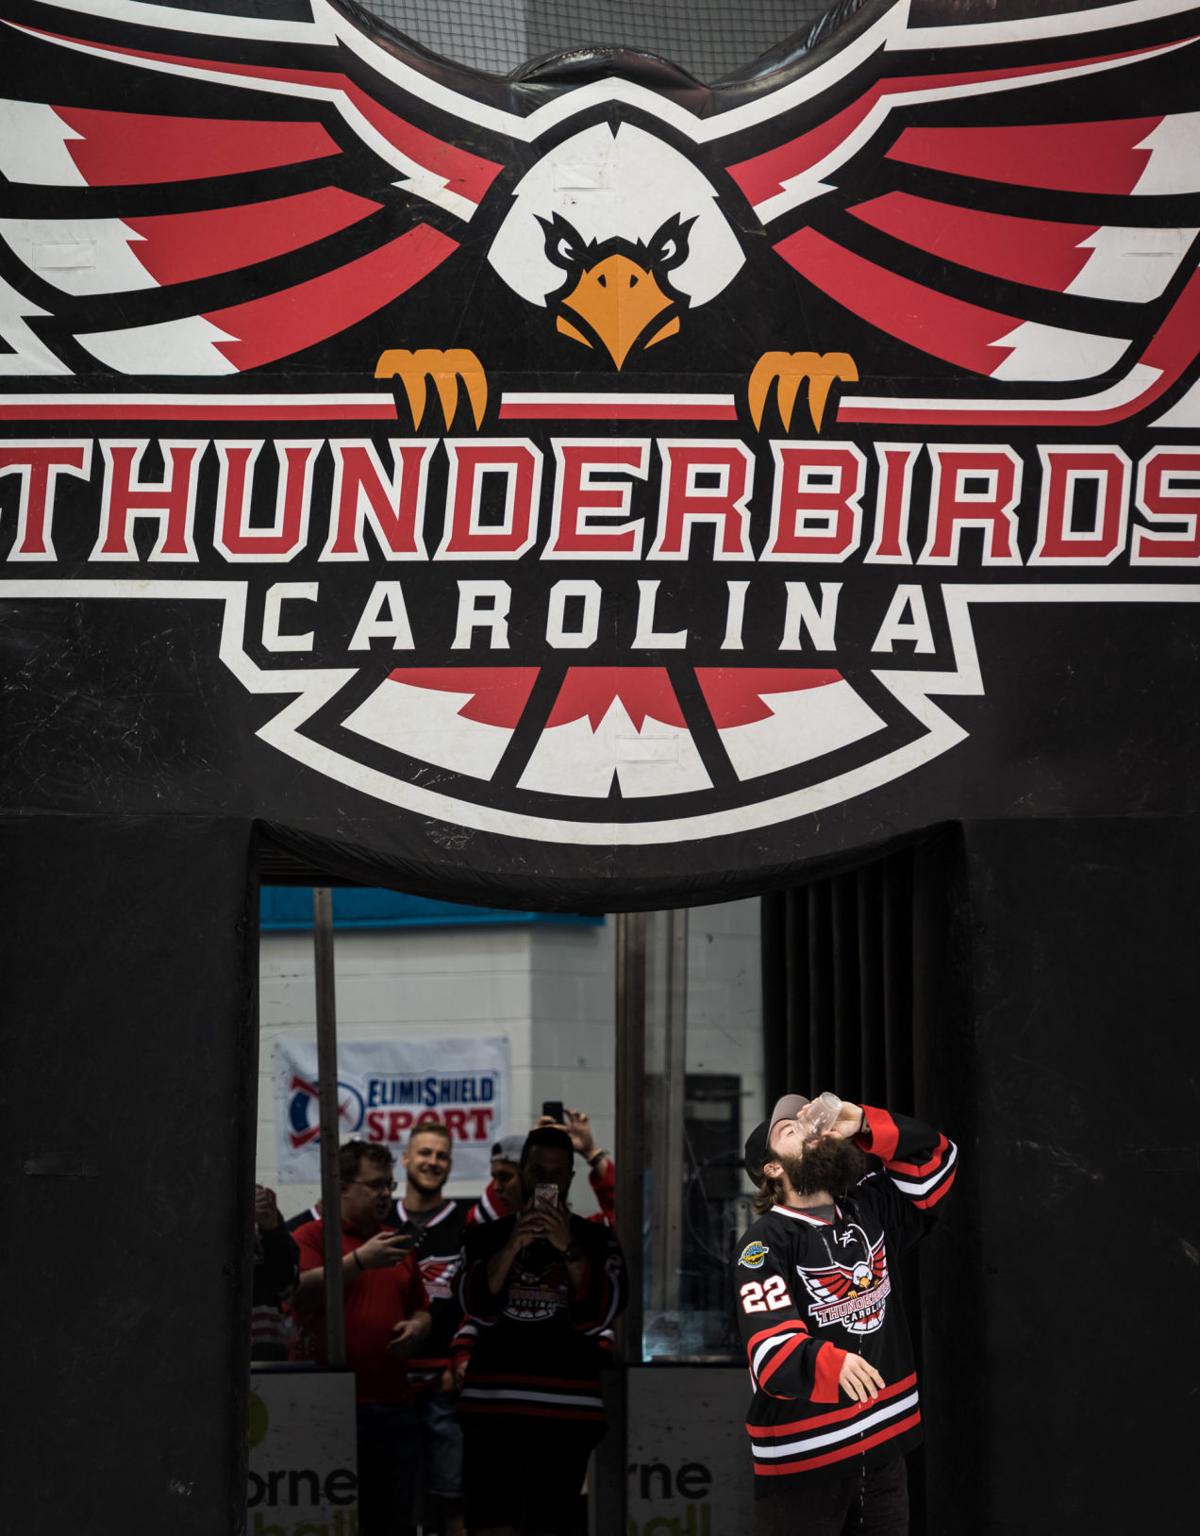 Carolina Thunderbirds on X: This week's jersey raffle: Joe